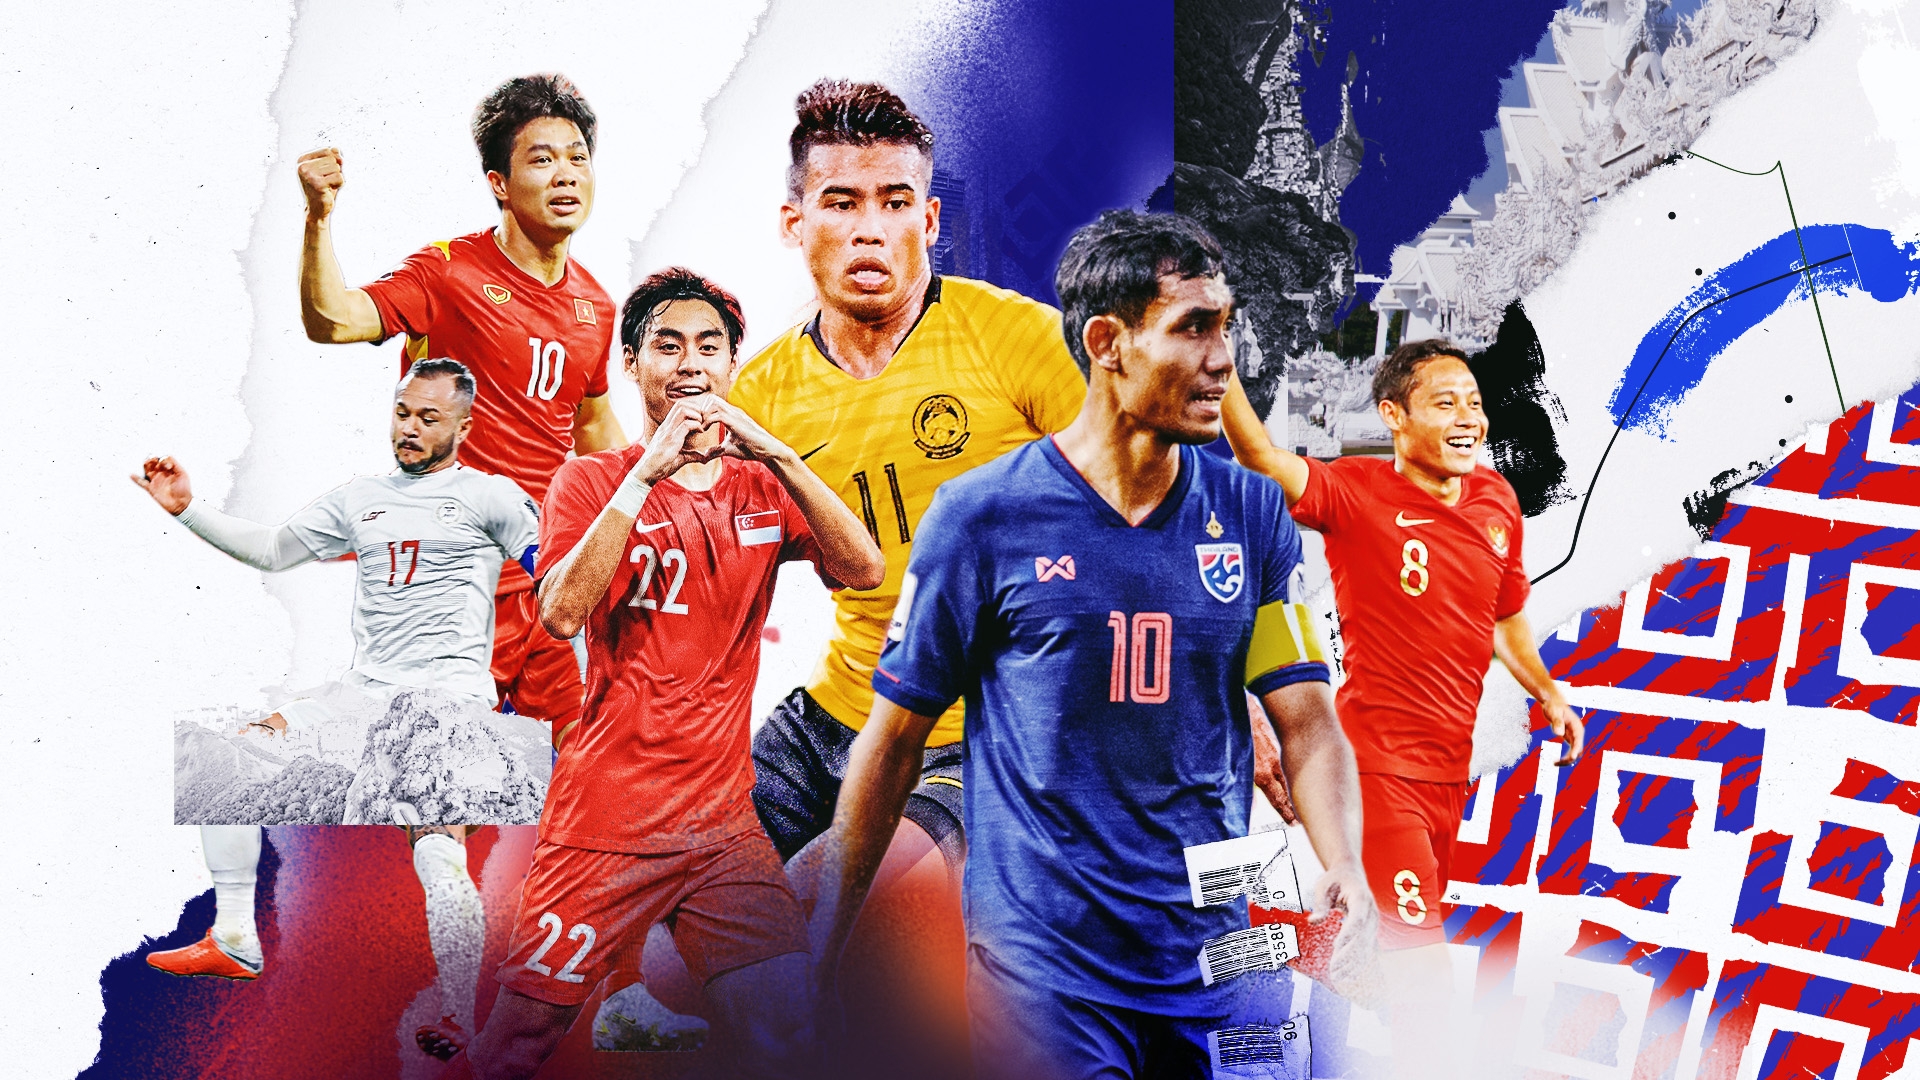 Laos National Football Team Wallpapers